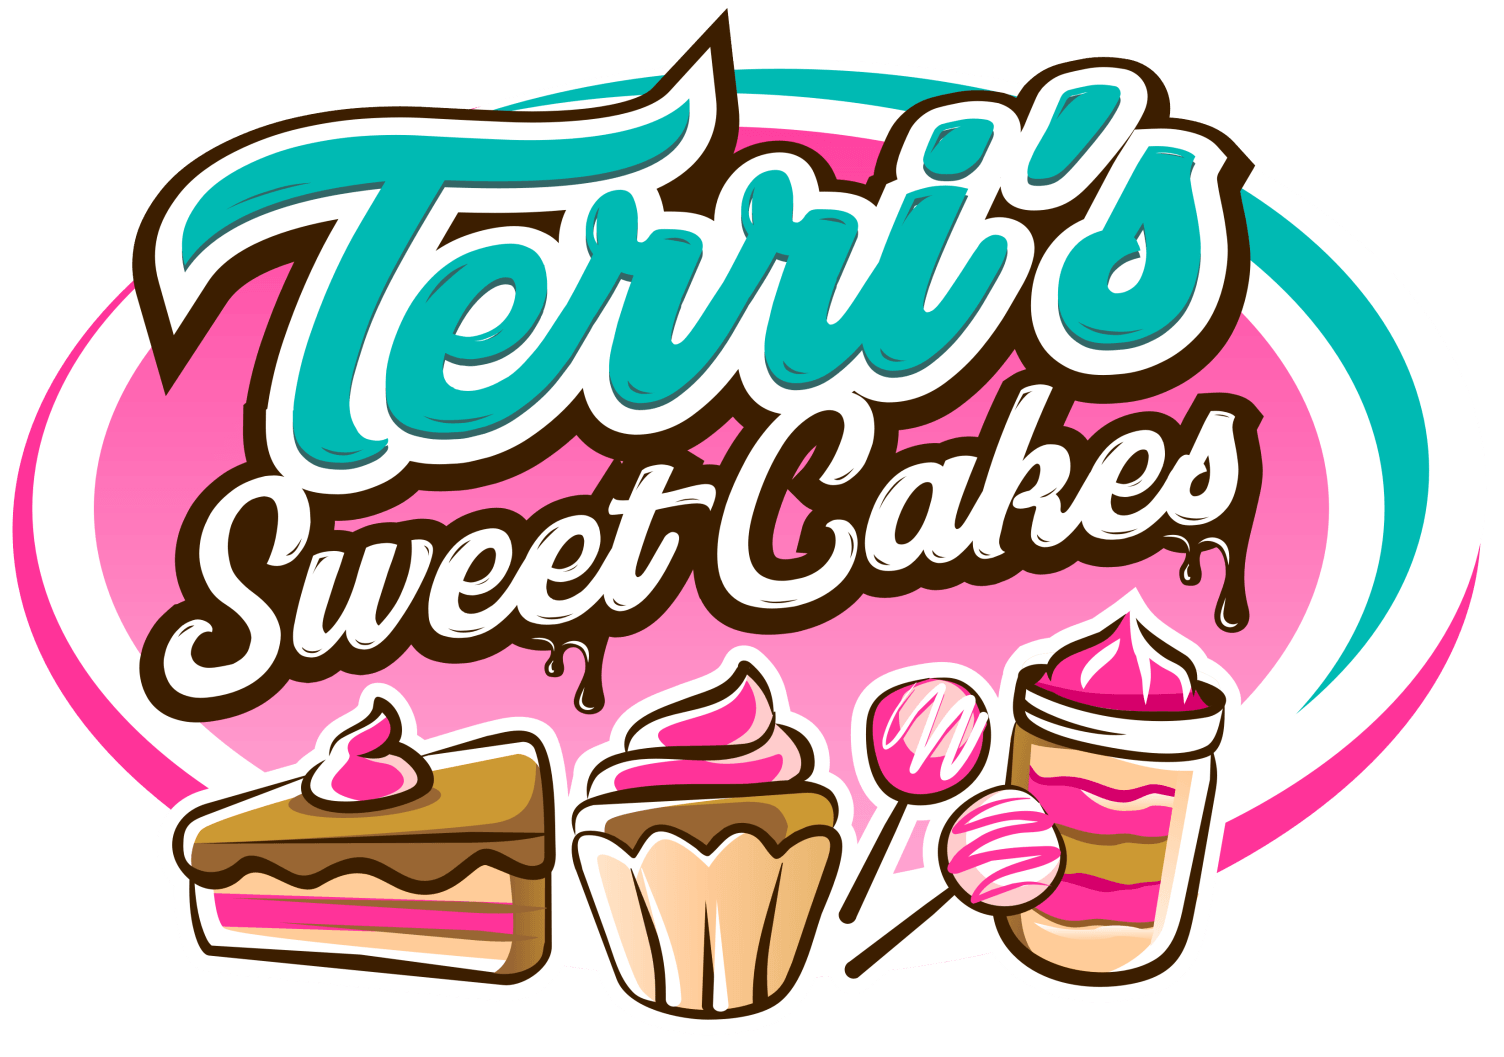 St. Louis Birthday Cakes by Terri's Sweet Cakes!